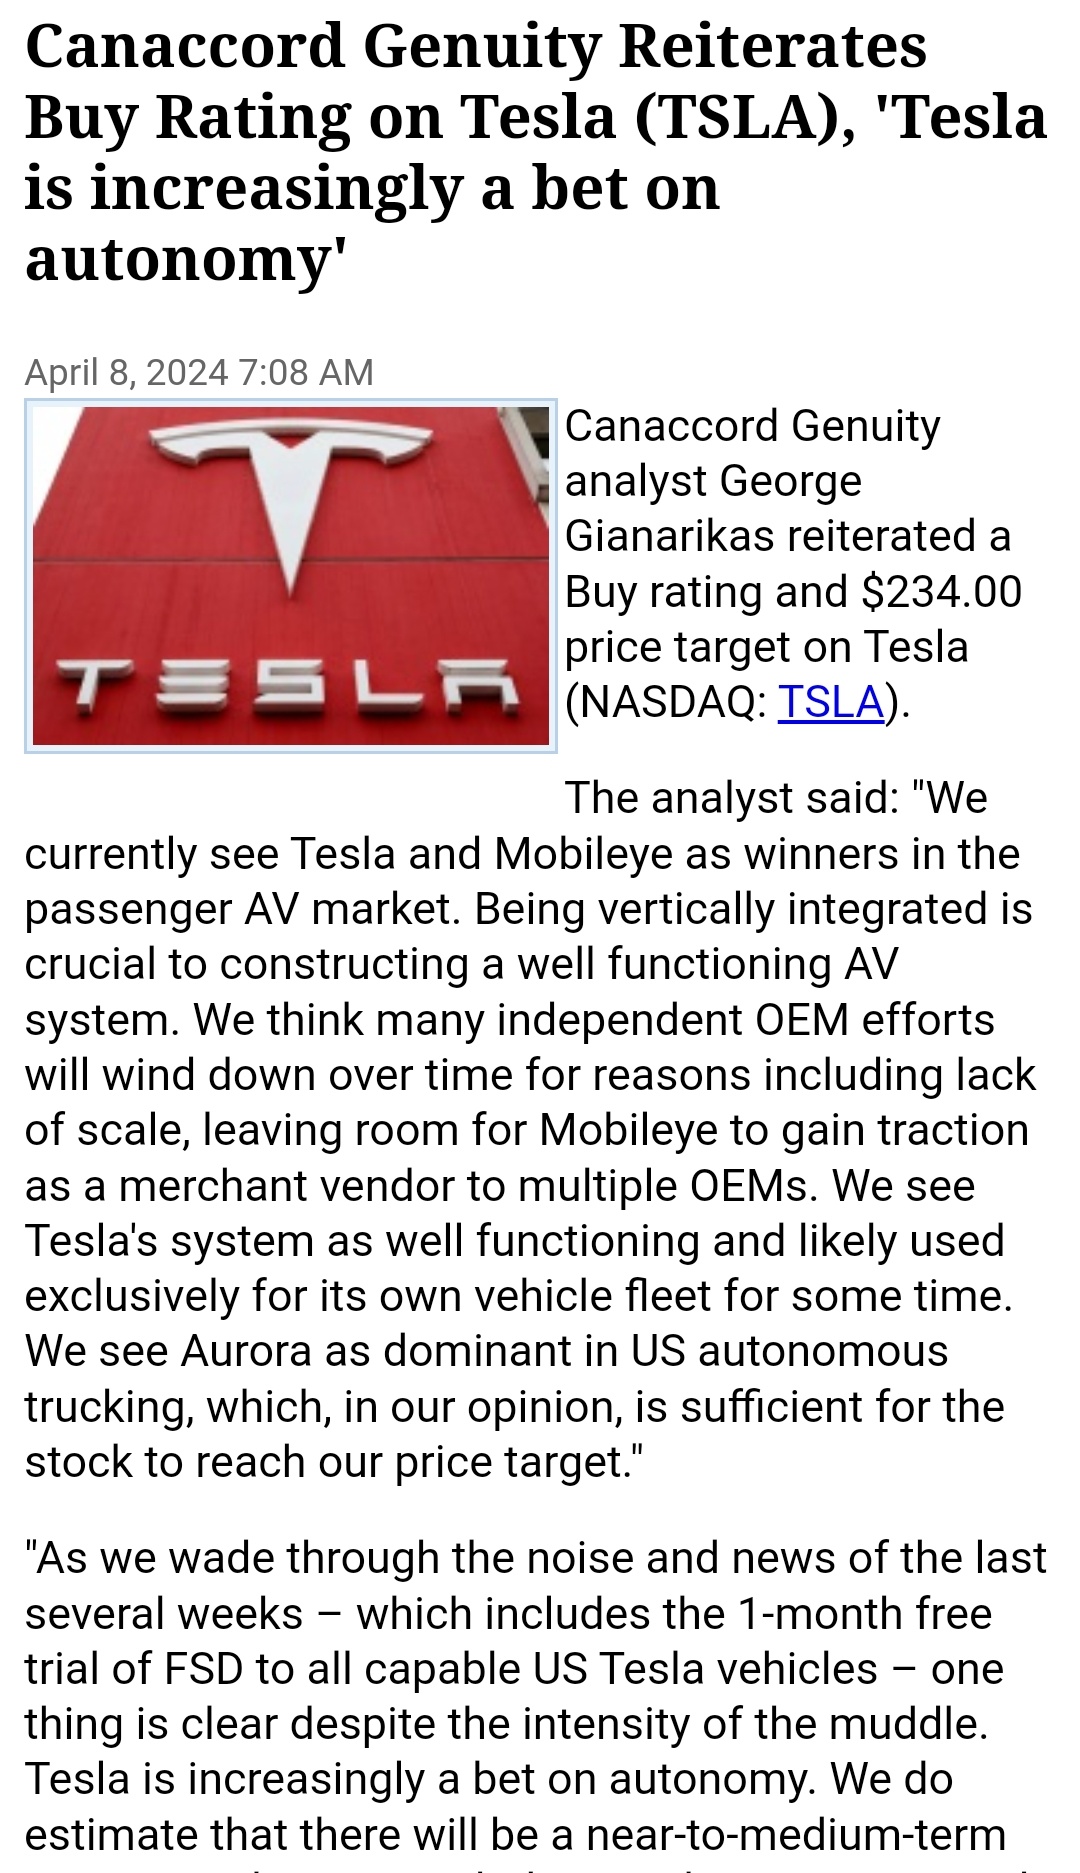 $Tesla (TSLA.US)$$BYD COMPANY (01211.HK)$$NIO Inc (NIO.US)$$XPeng (XPEV.US)$ Canaccord Genuity analyst George Gianarikas reiterated a Buy rating and $234.00 pri...